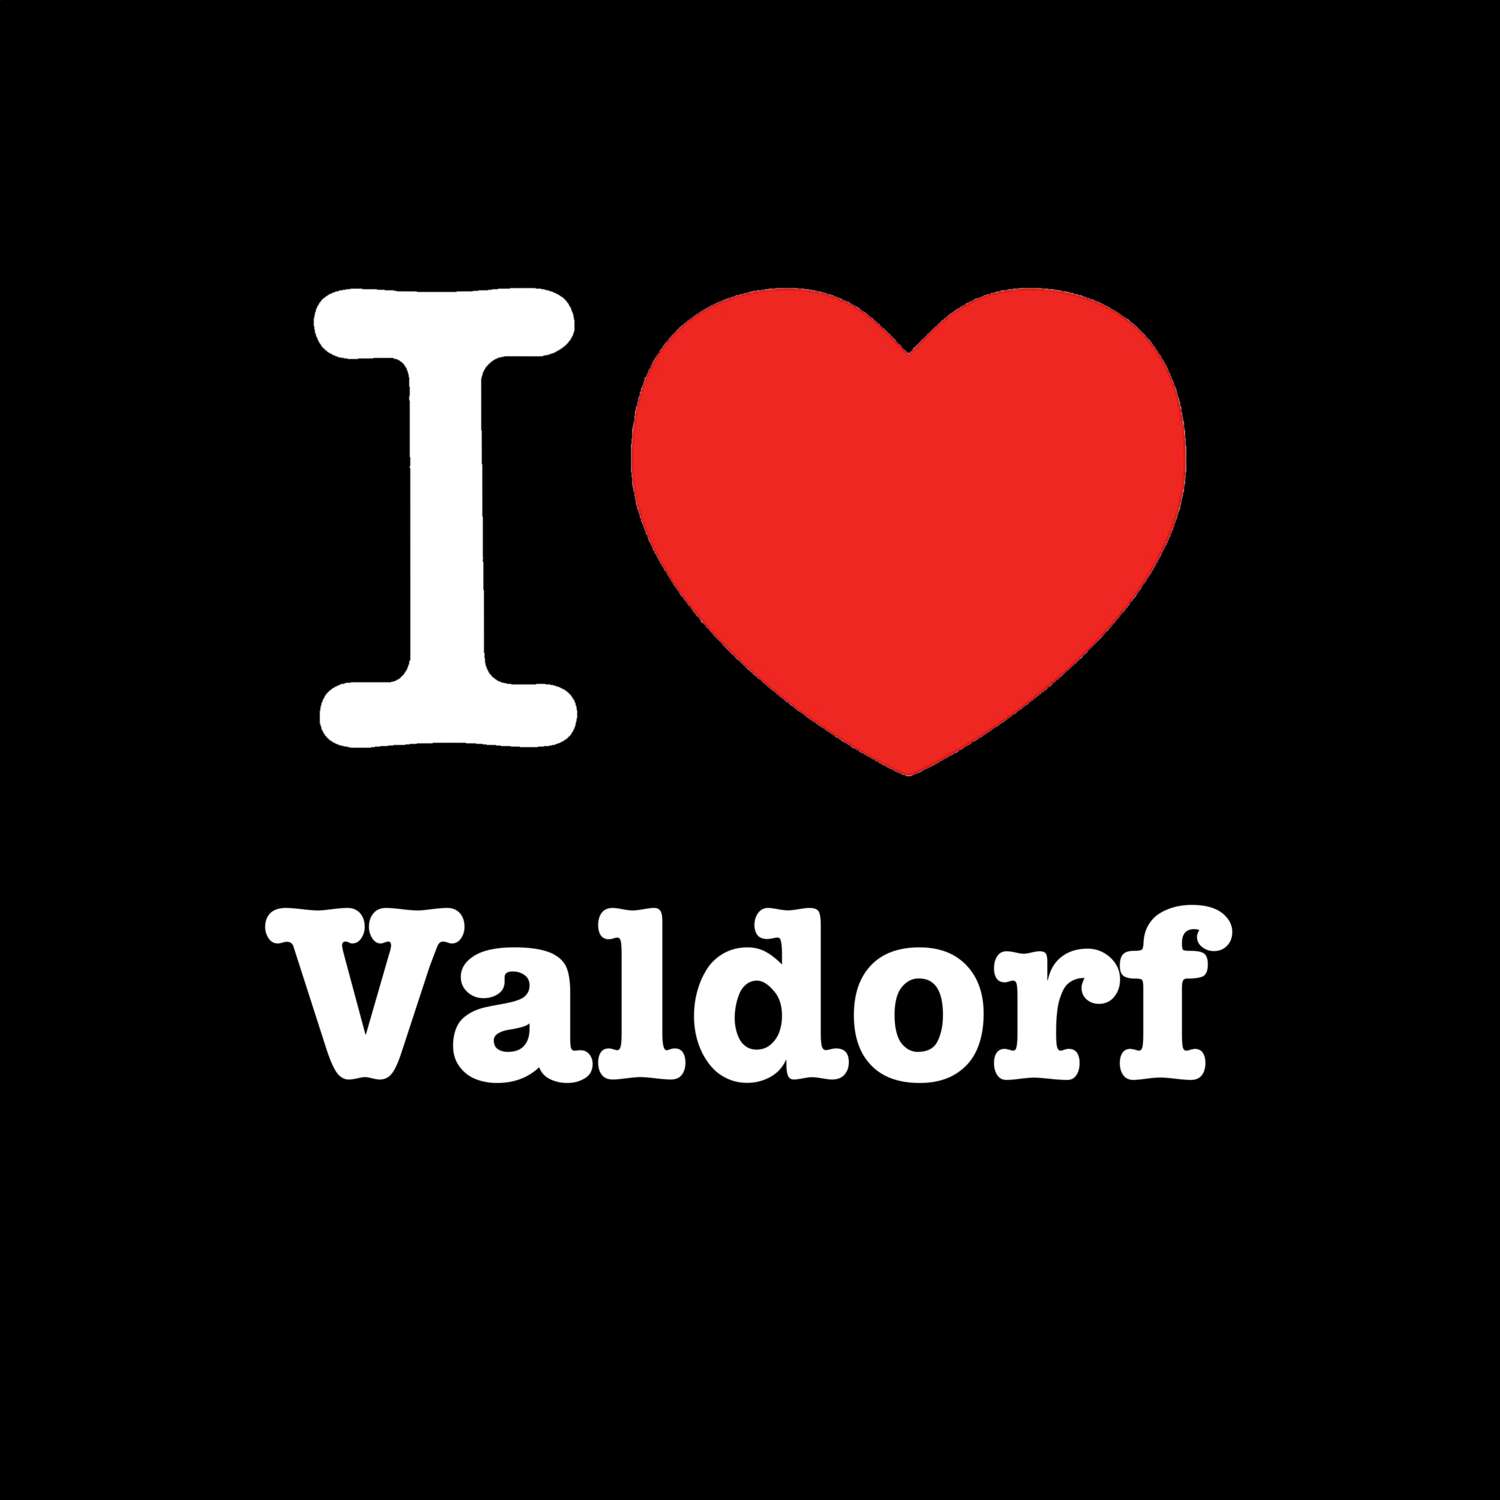 Valdorf T-Shirt »I love«